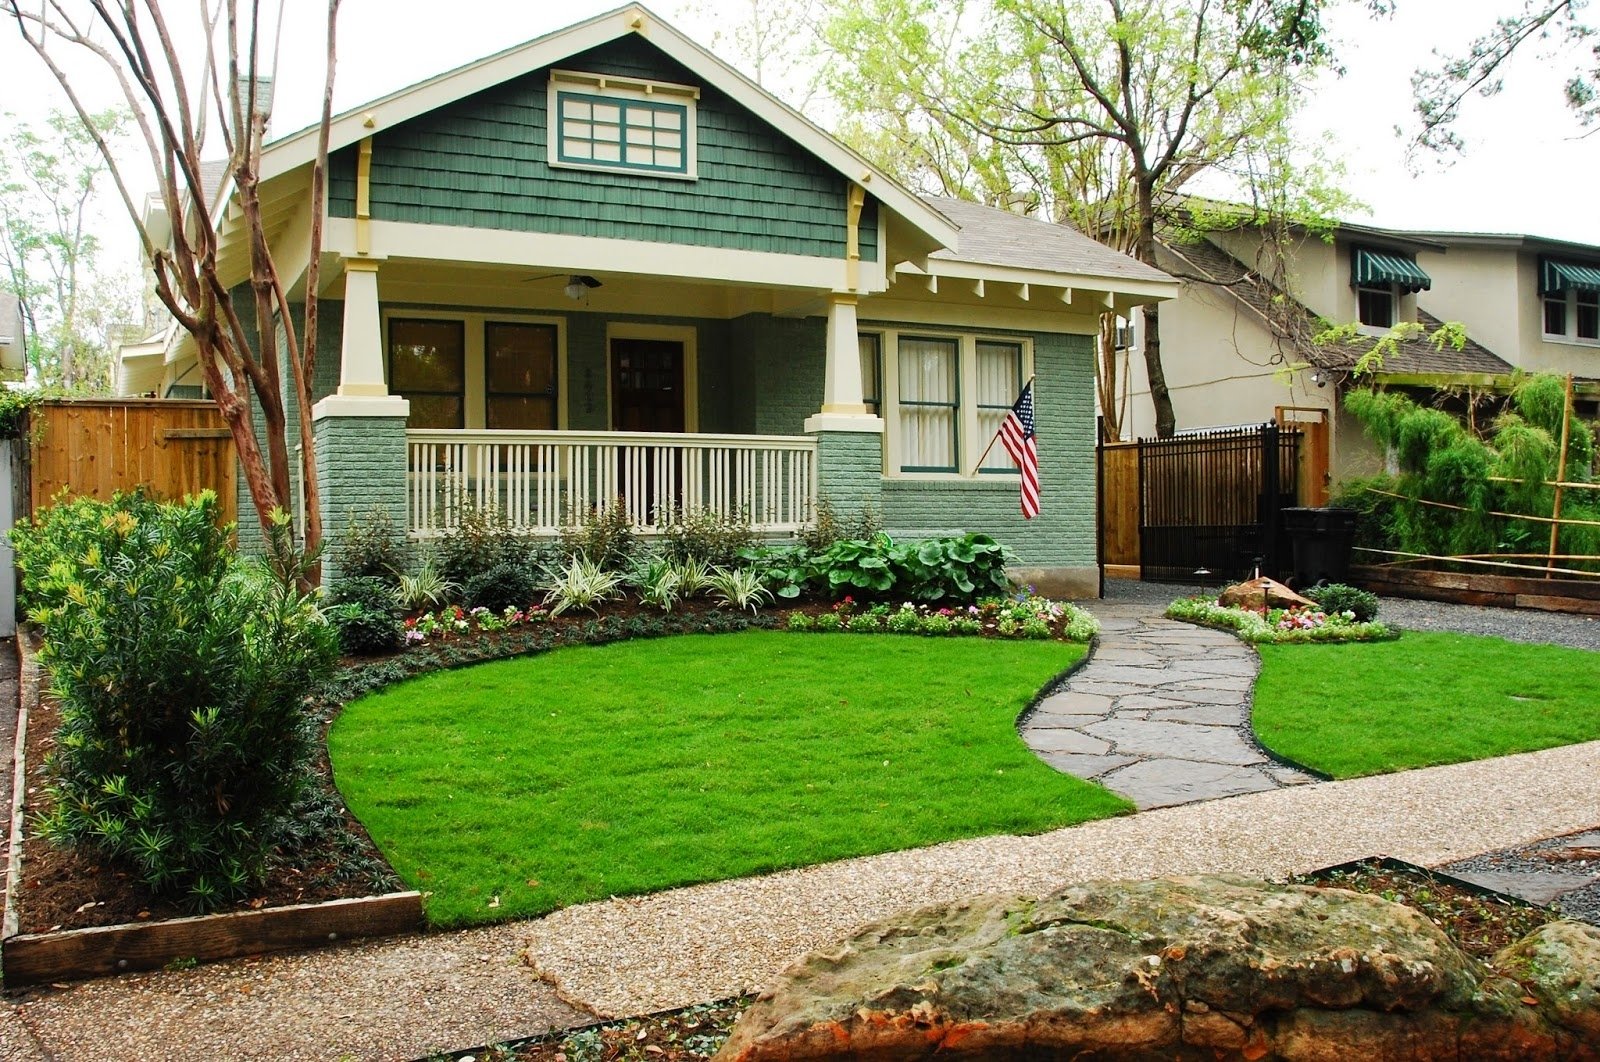 10 Fabulous Landscape Design Ideas For Small Front Yards landscaping photos of small front yard saomc co 2022